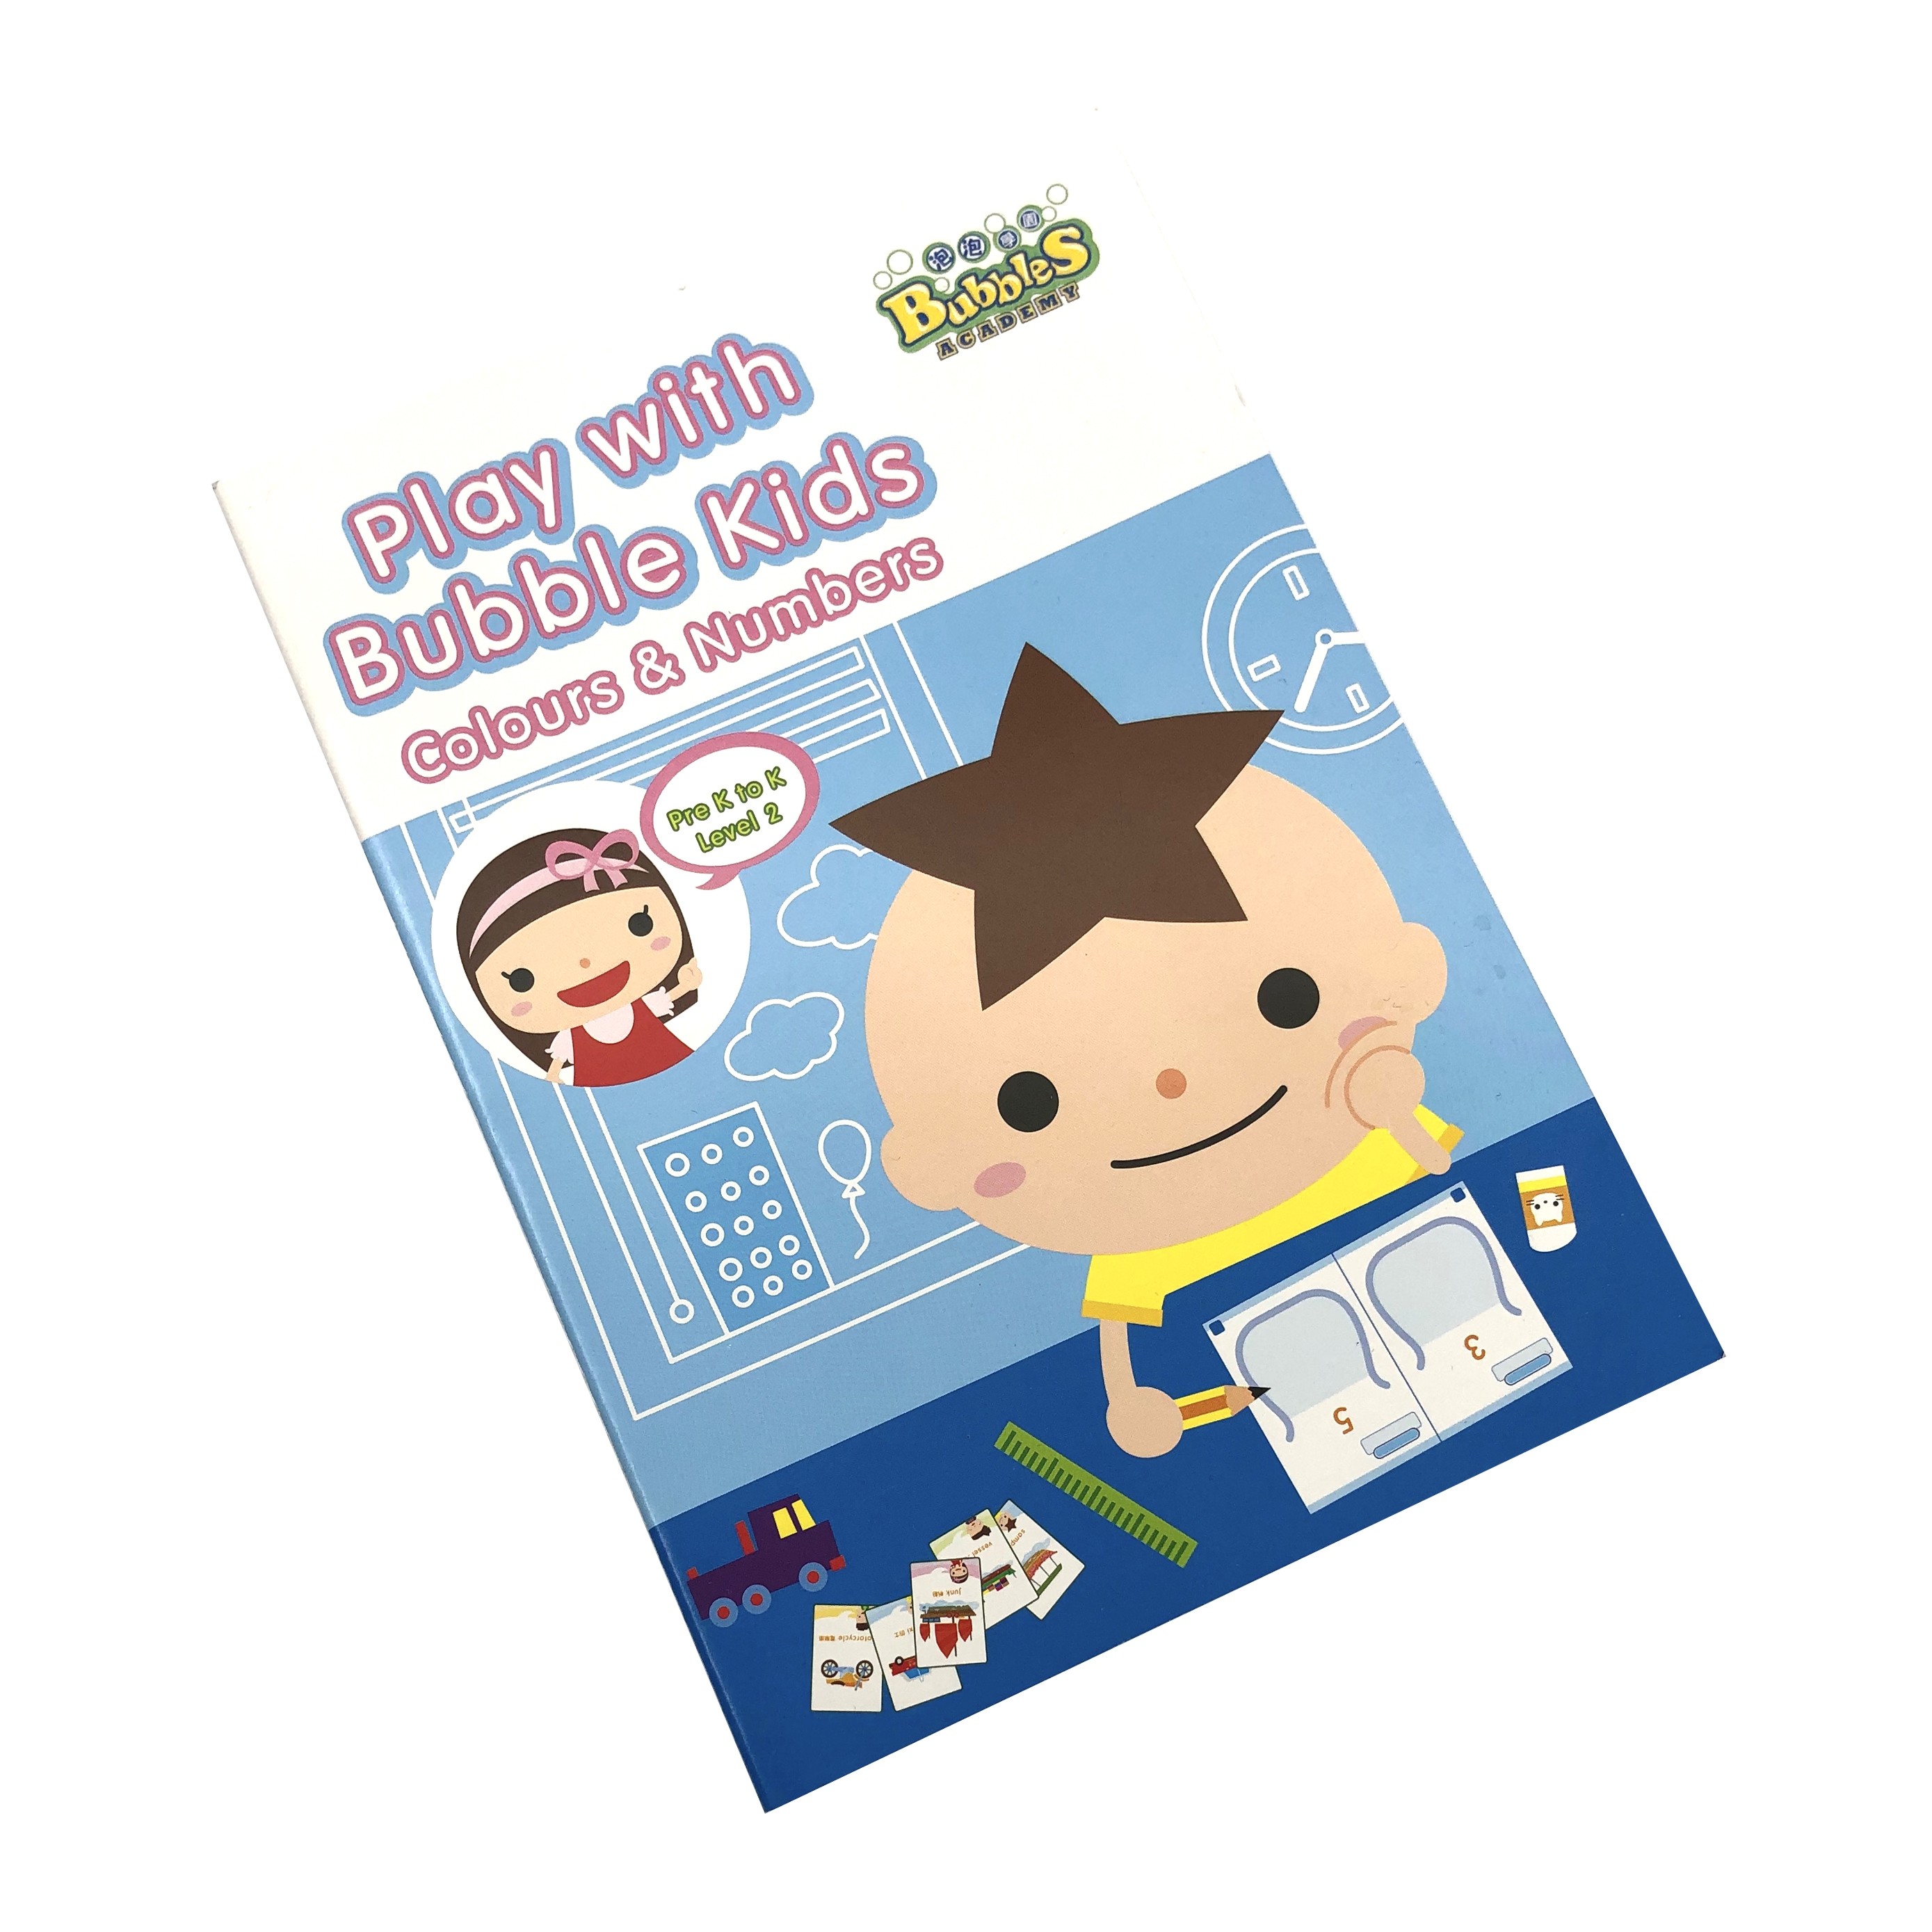 泡泡學園學前教材 (顏色與數字) 學習冊 - 中階 Bubbles Academy - Play with Bubble Kids (Colours and Numbers) Pre K to K Learning Booklet - Level 2